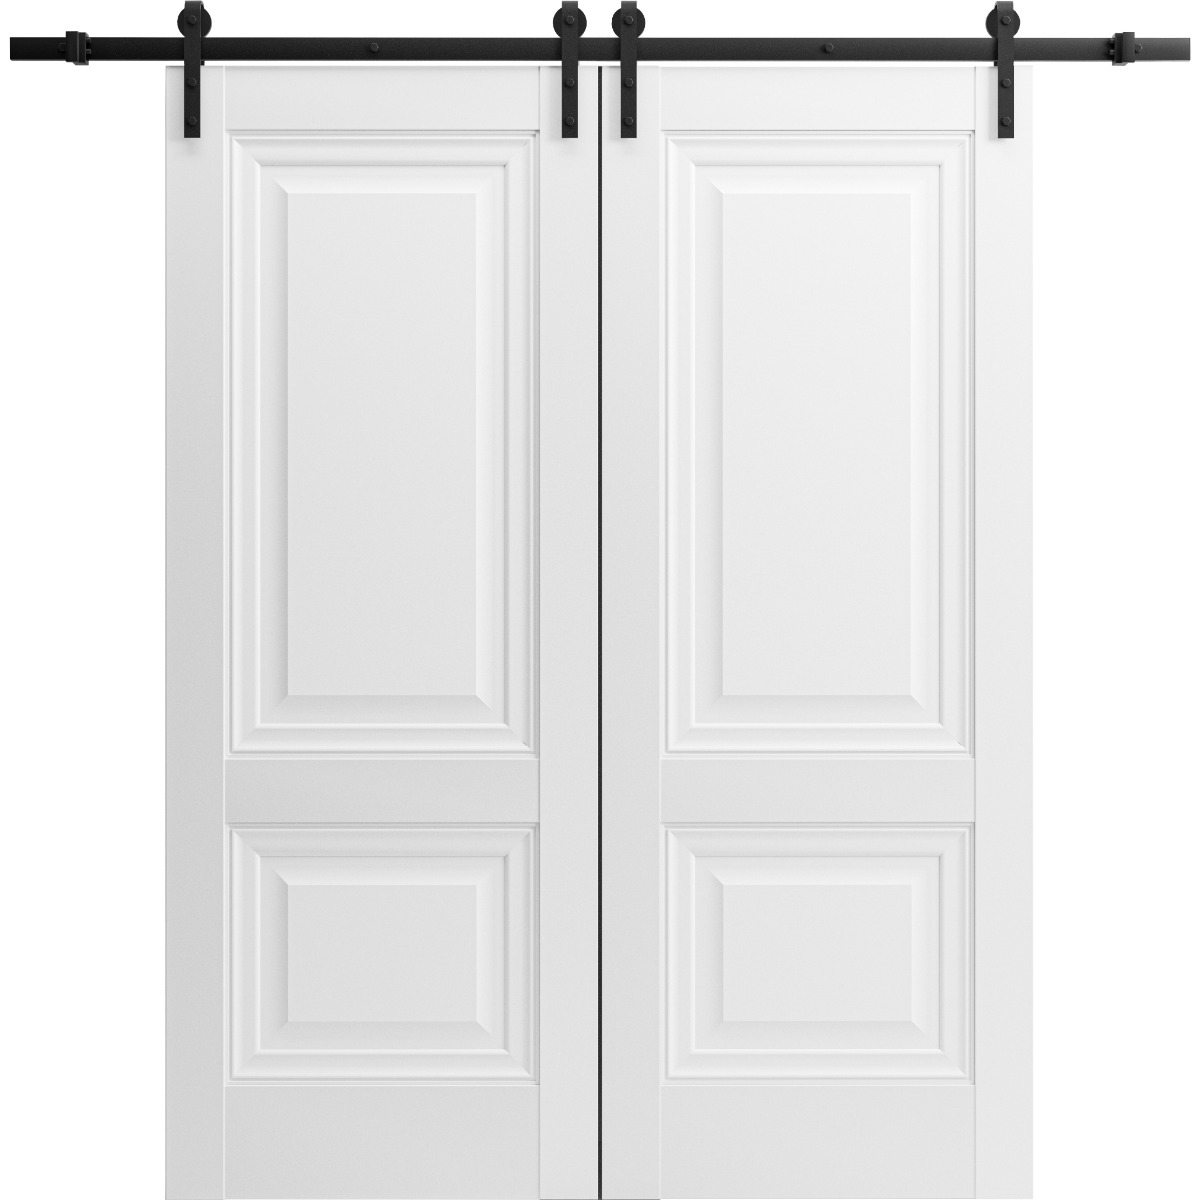 Sliding Double Barn Doors with Hardware | Lucia 8831 White Silk | 13FT Rail Sturdy Set | Kitchen Lite Wooden Solid Panel Interior Bedroom Bathroom Door-72